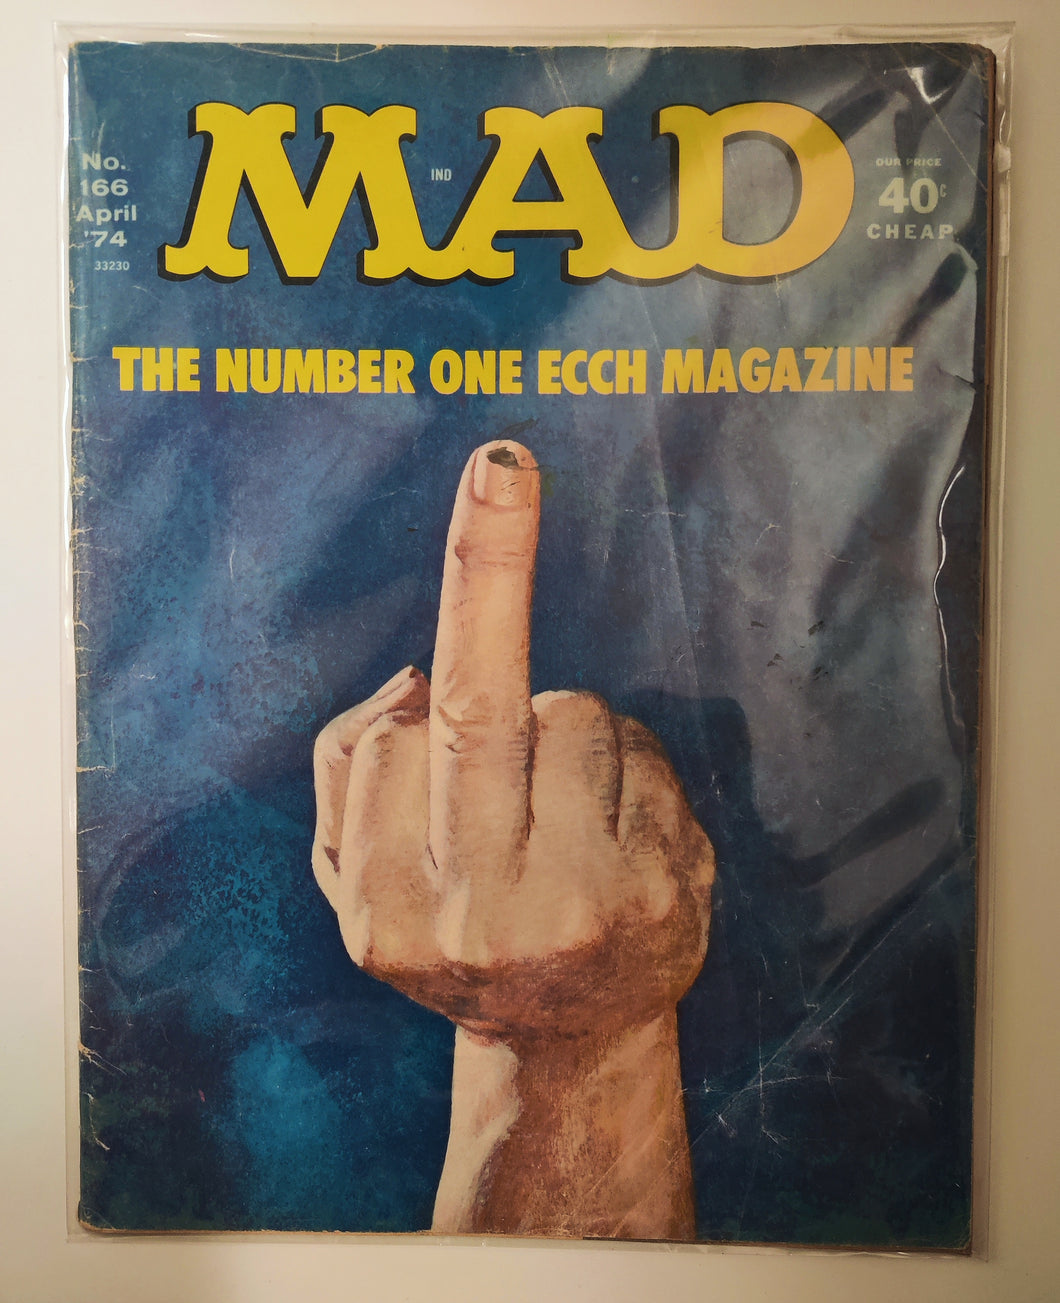 MAD Magazine #166, April 1974